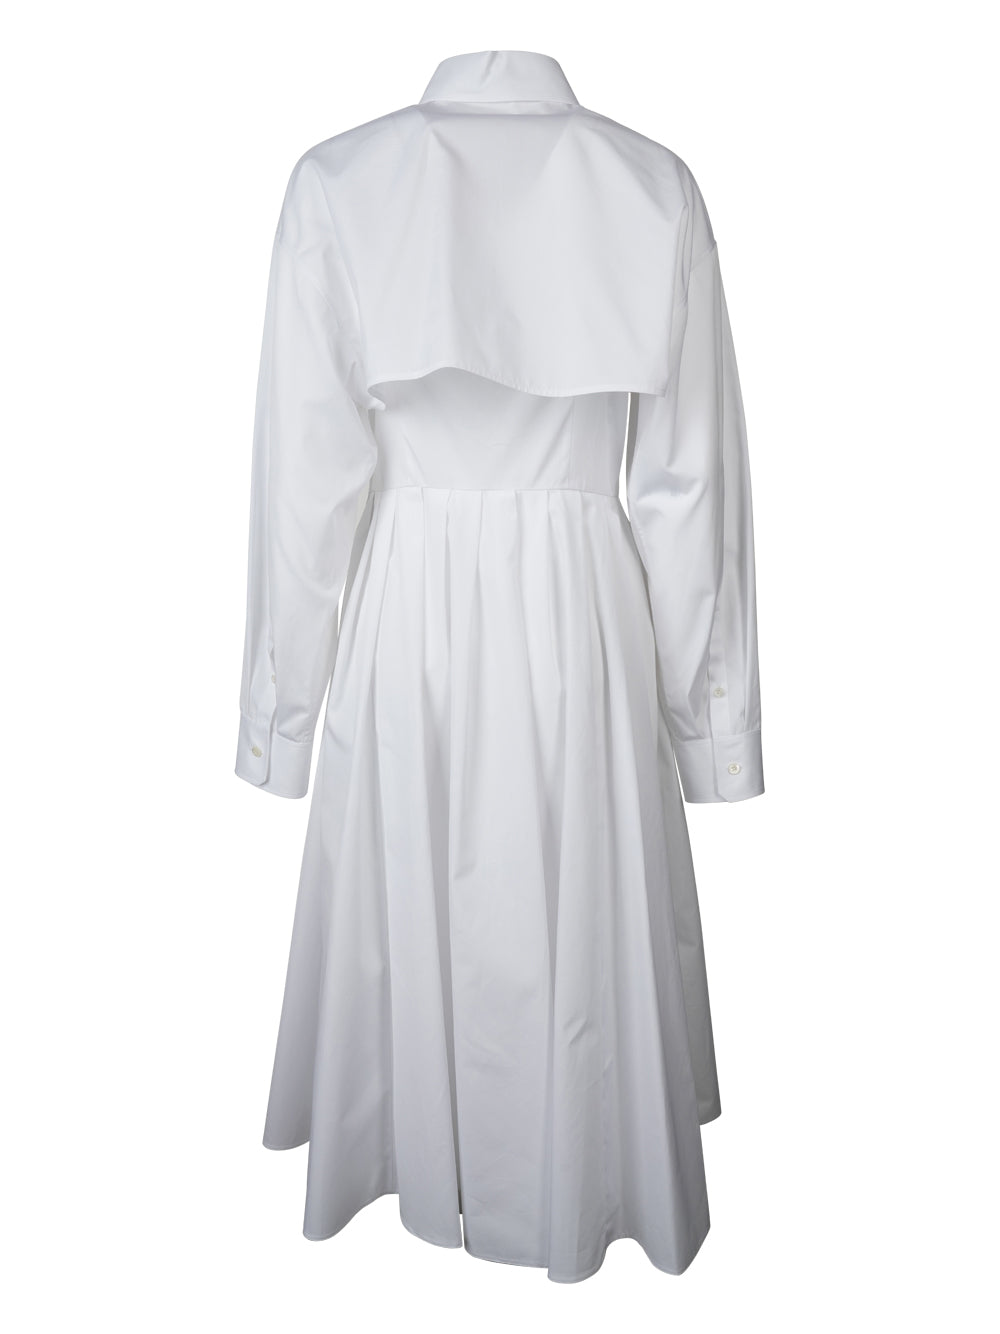 PRADA WHITE SUIT DRESS